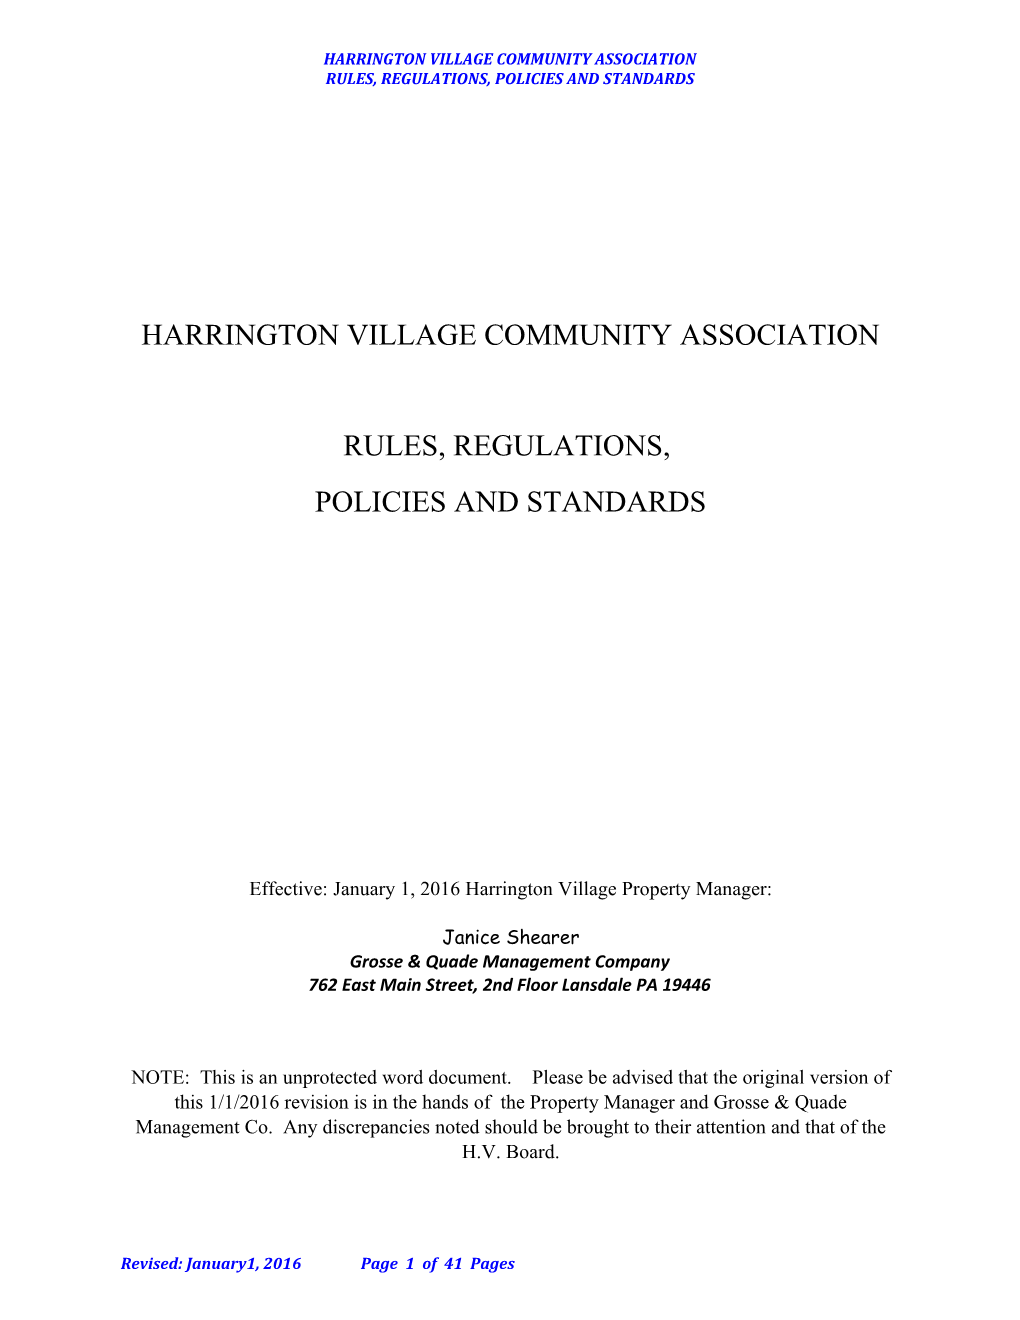 Harrington Village Community Association Rules, Regulations, Policies and Standards